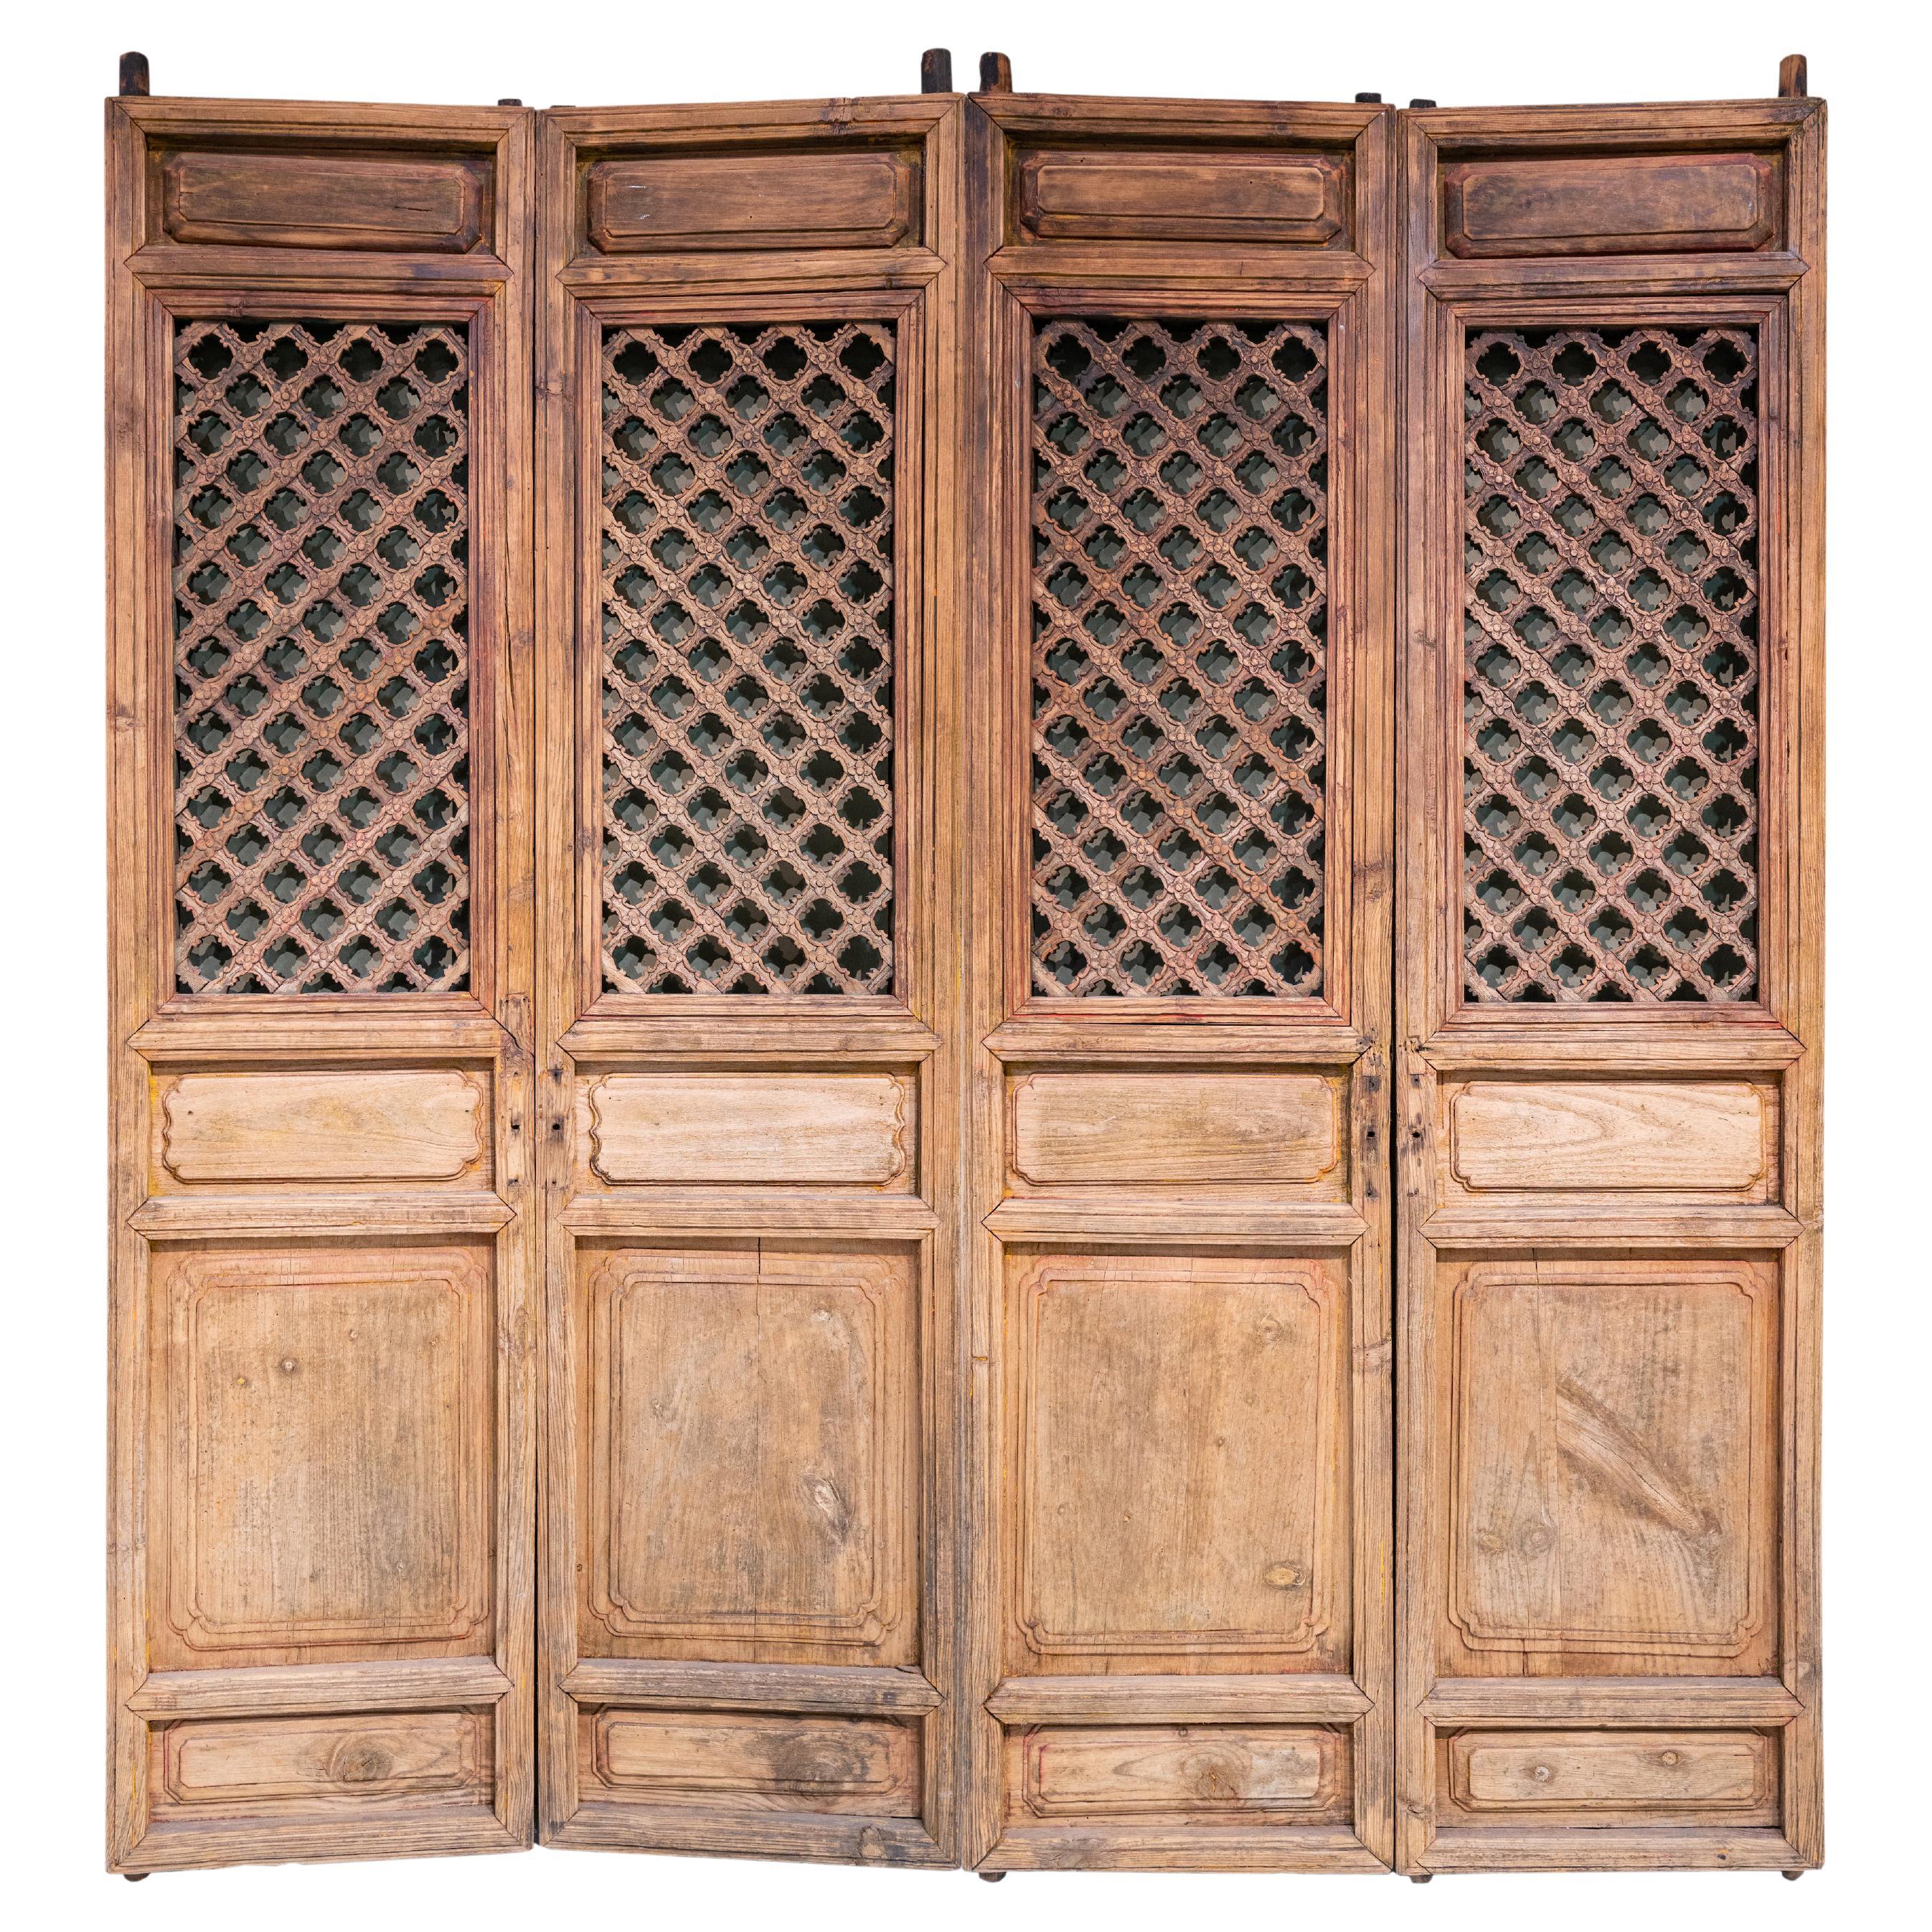 Late 19th Century Chinese Door Panels